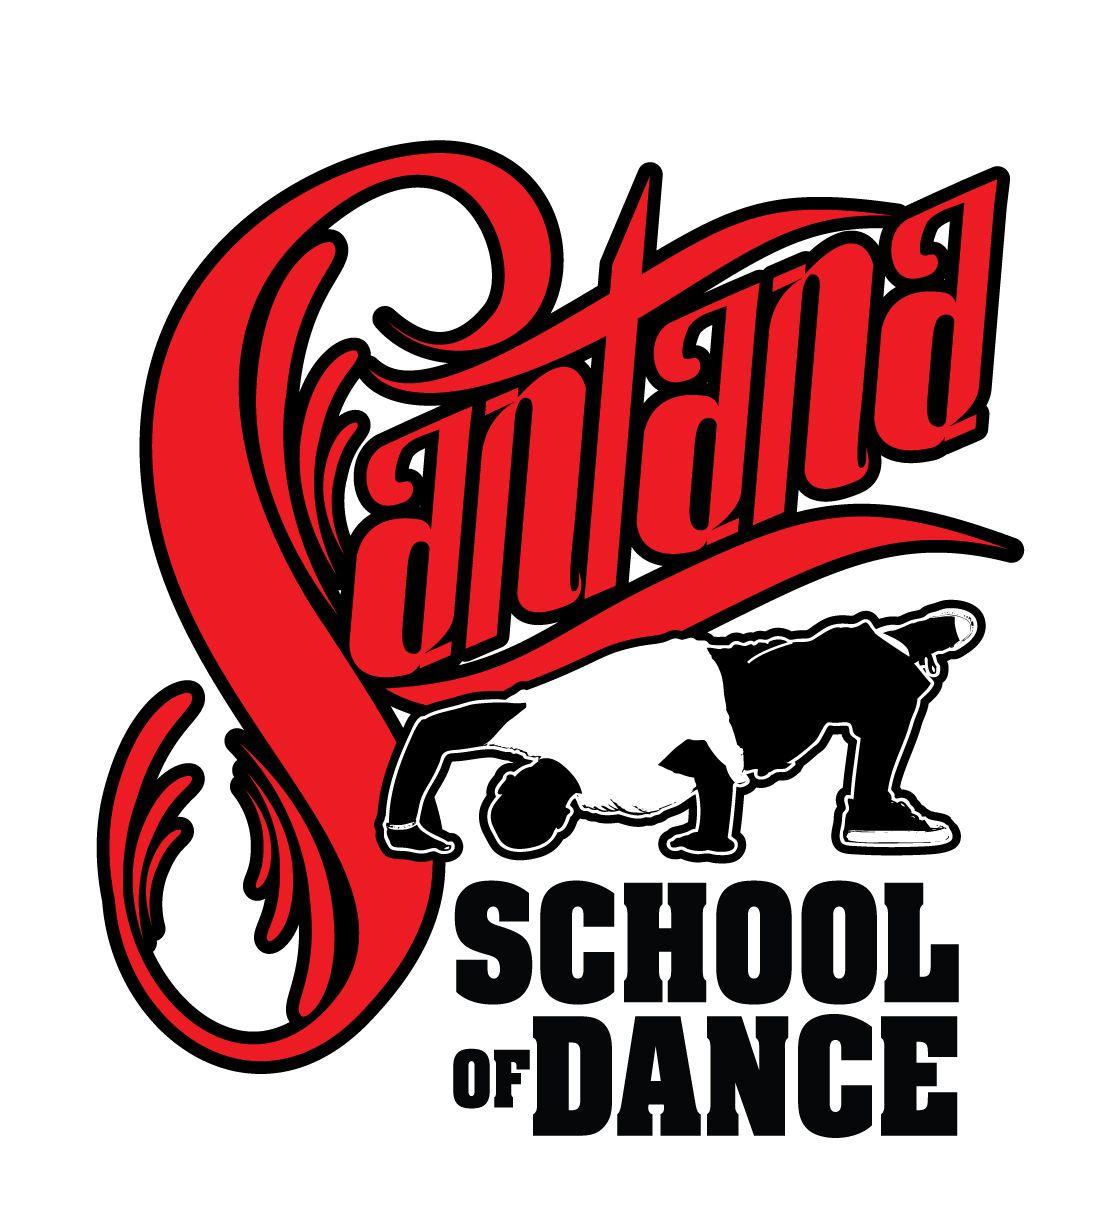 Santana Logo - Santana School of Dance Logos | studioelusive